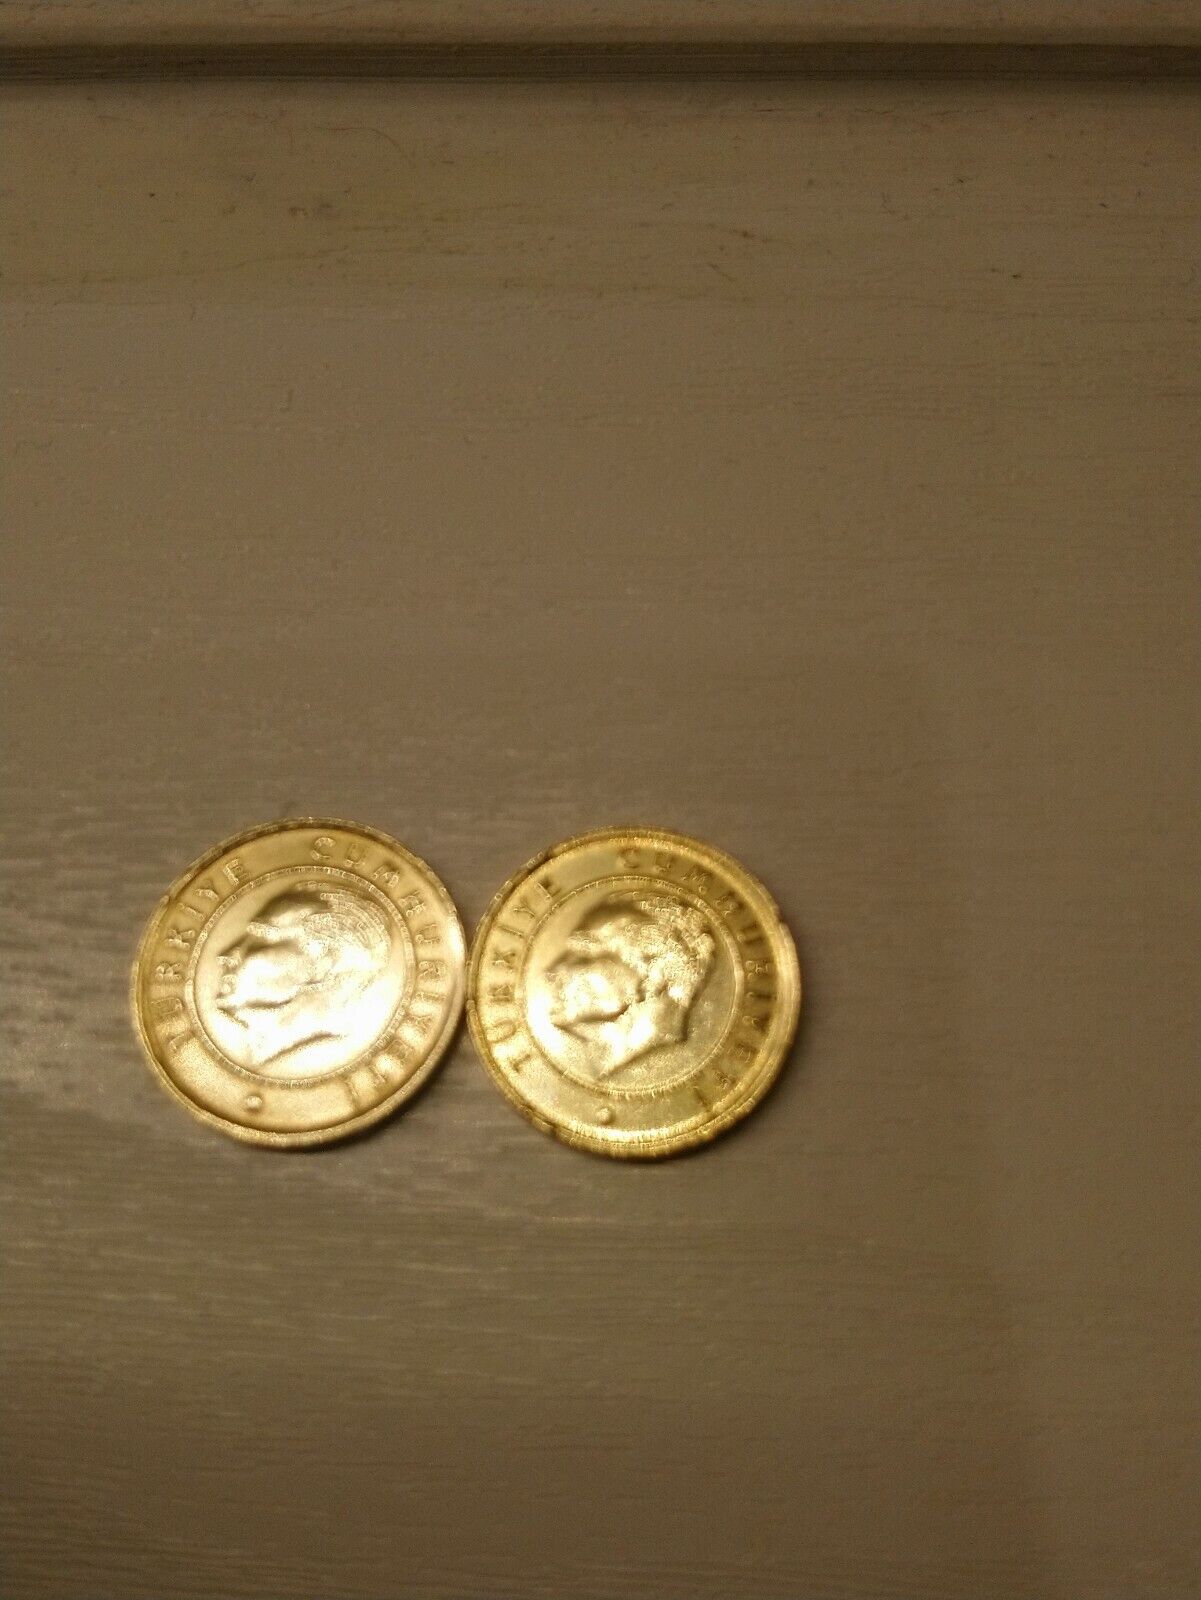 Turkish 10 Kurus Coin x2 (Both 2014) Без бренда - фотография #2